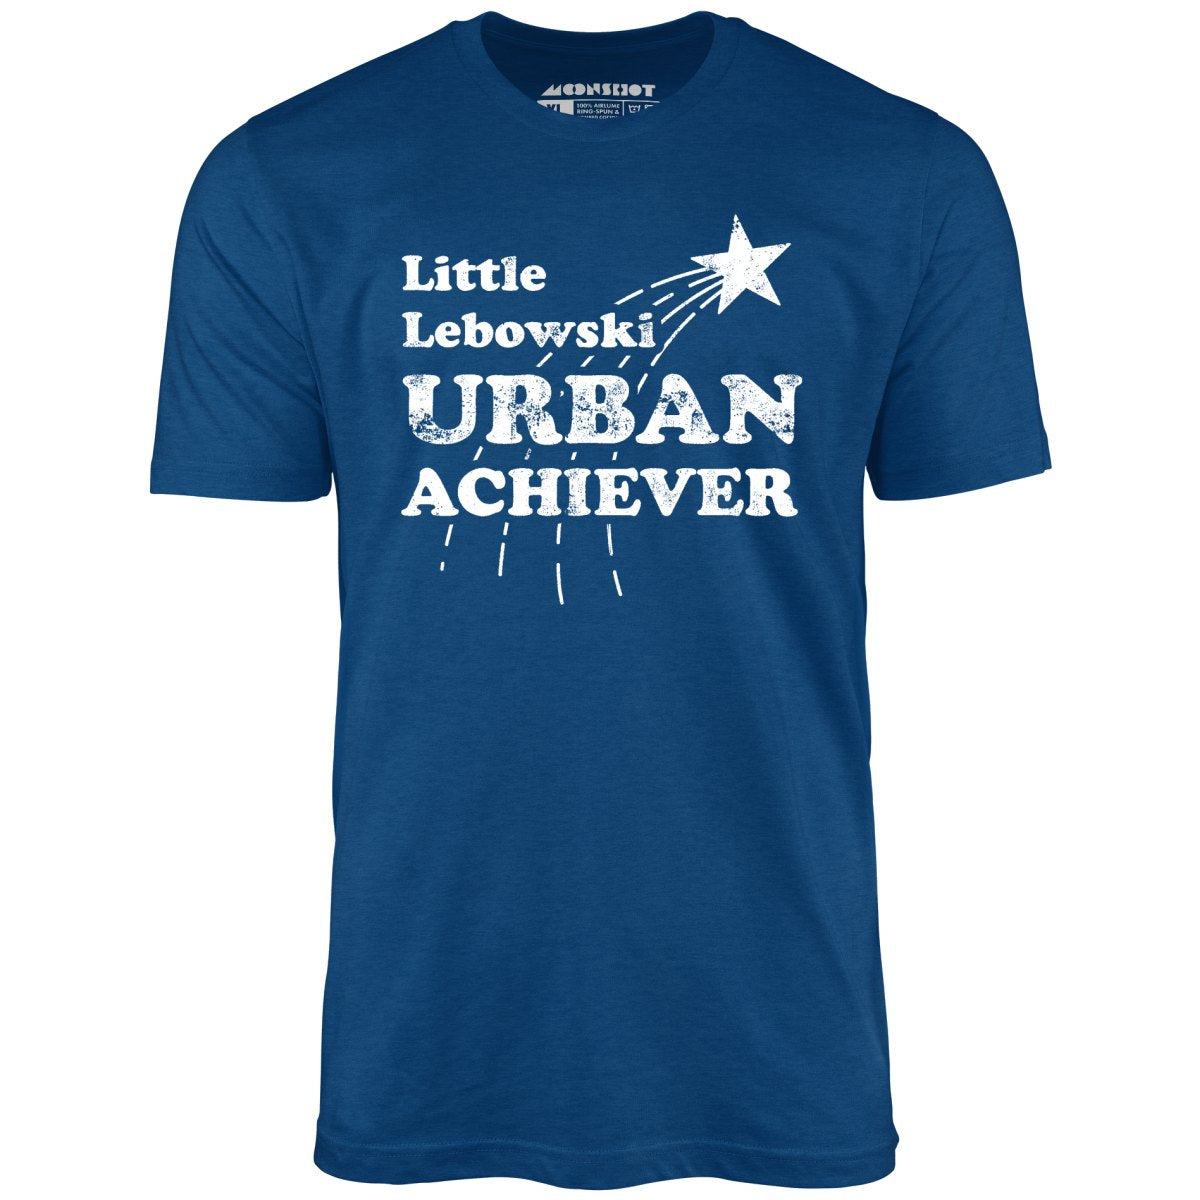 Little Lebowski Urban Achiever - Unisex T-Shirt